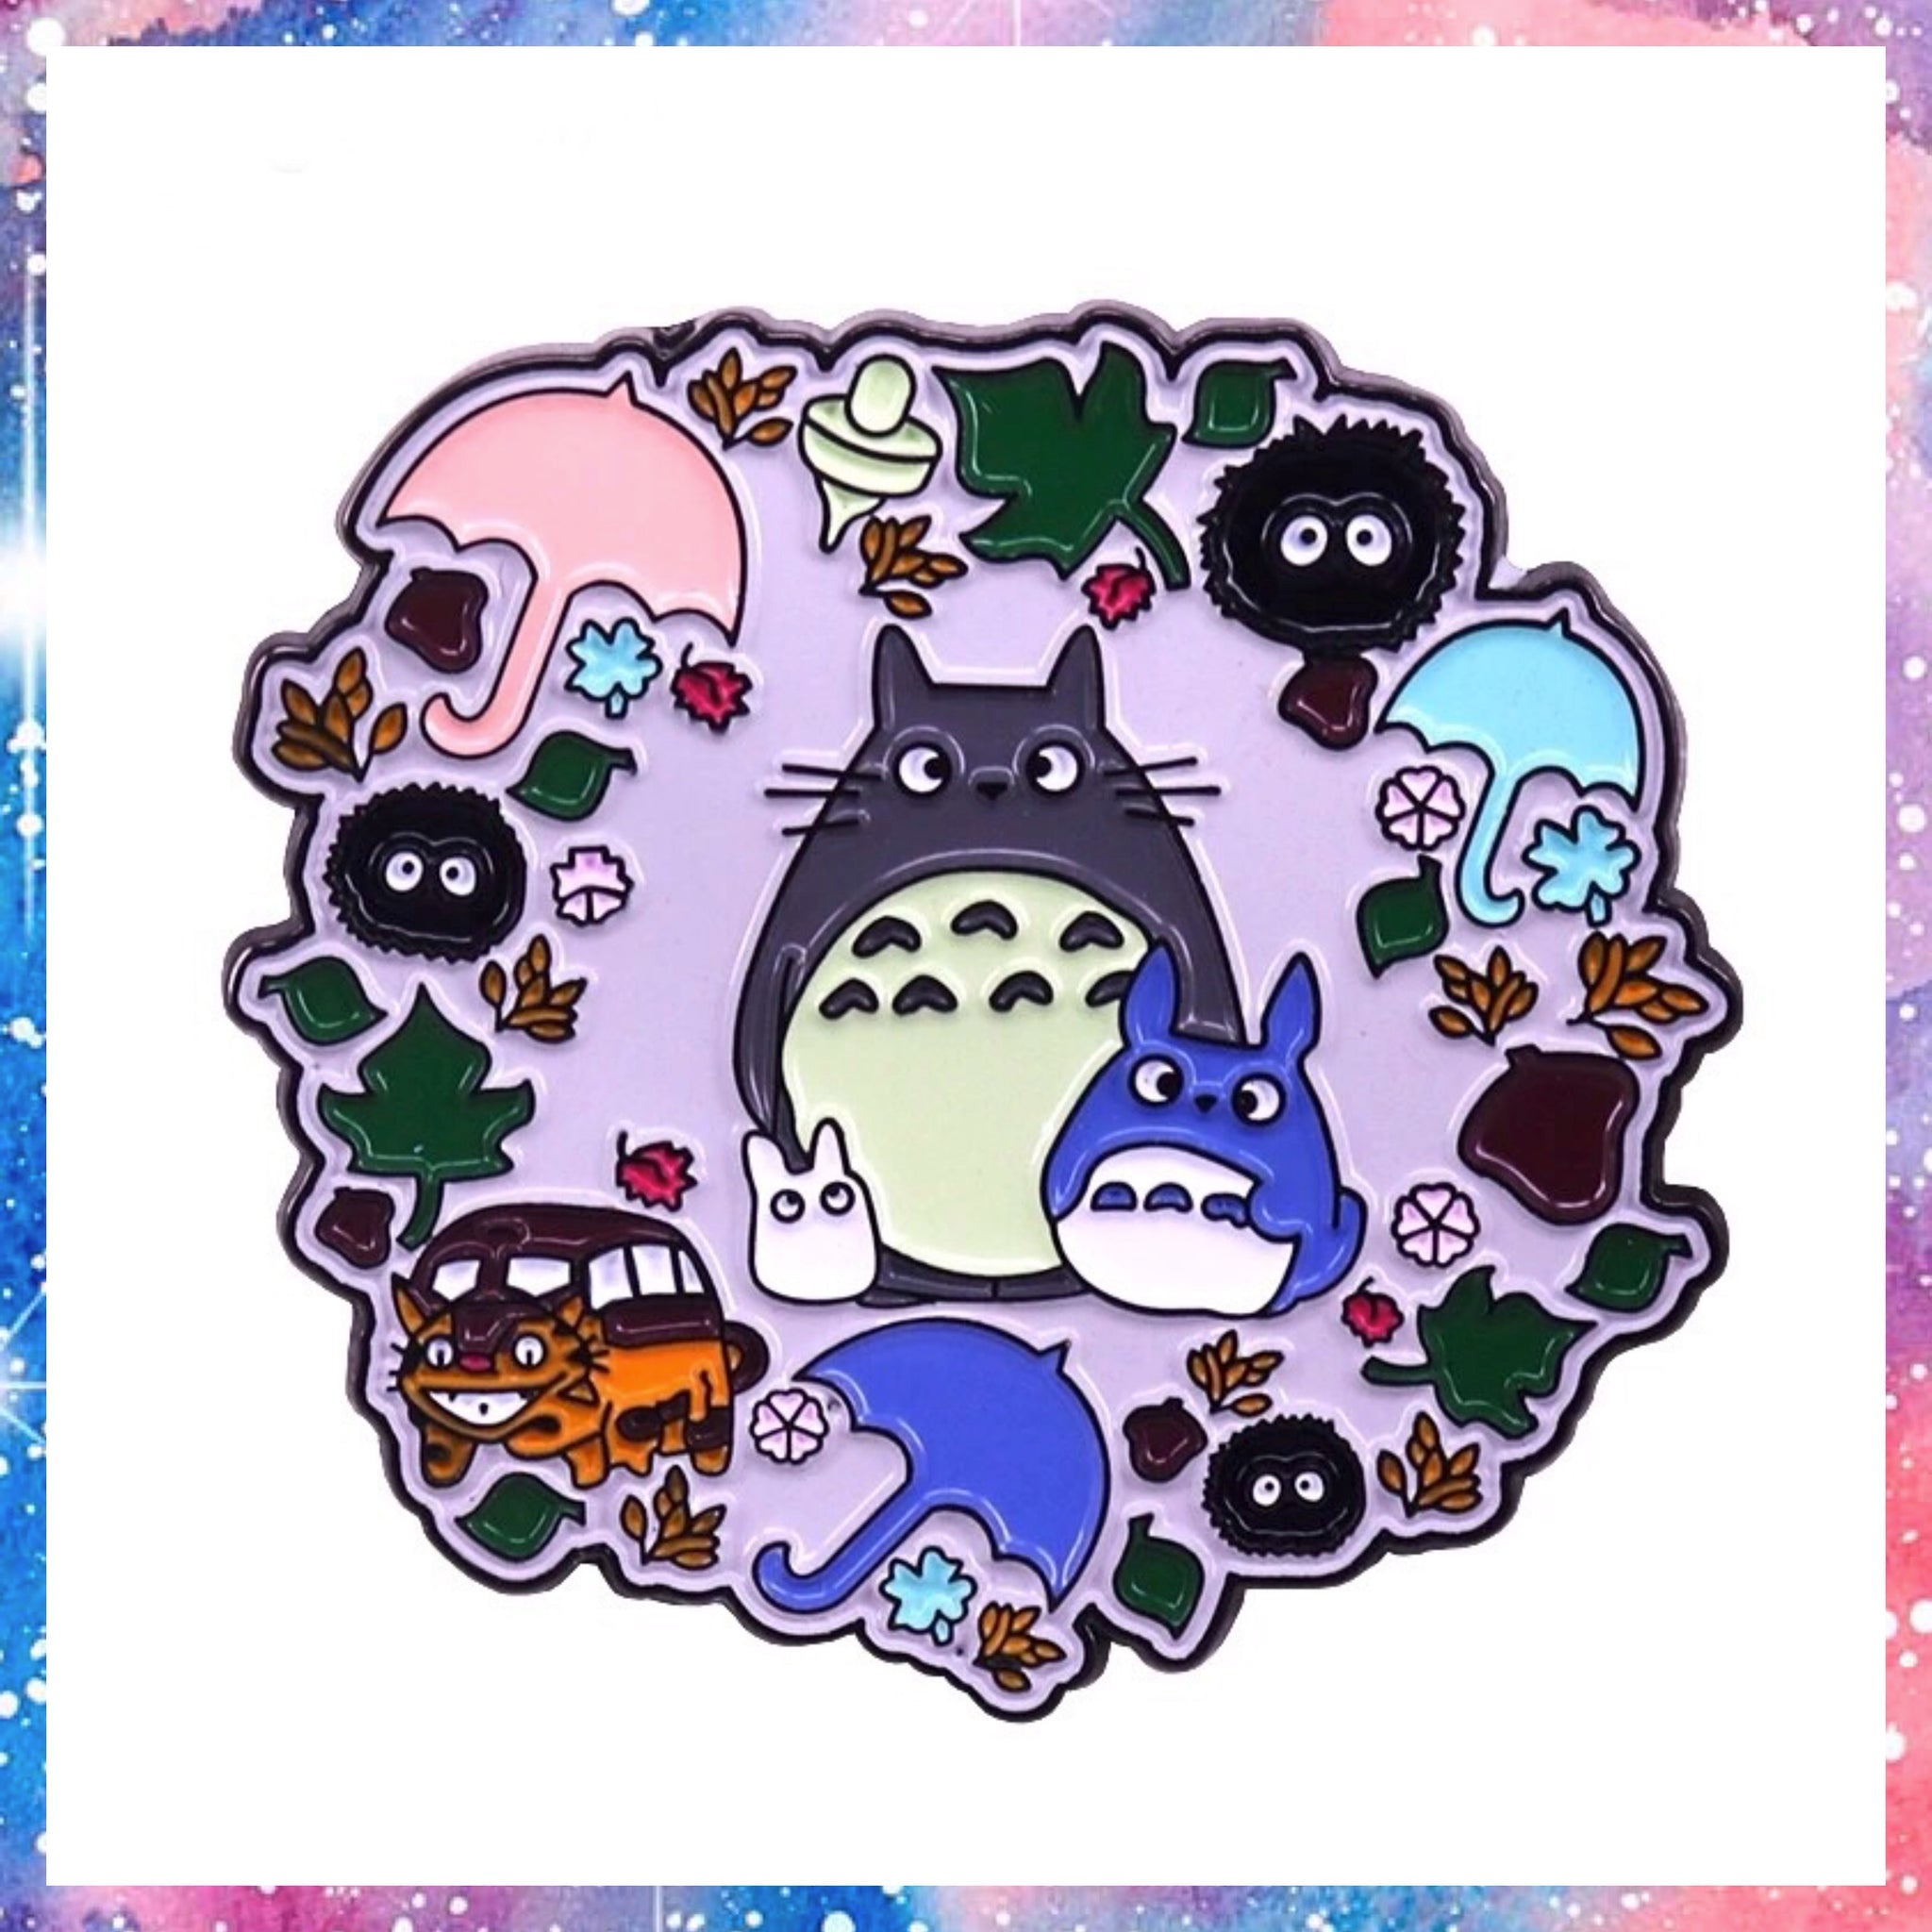 Pin “Totoro Collage”